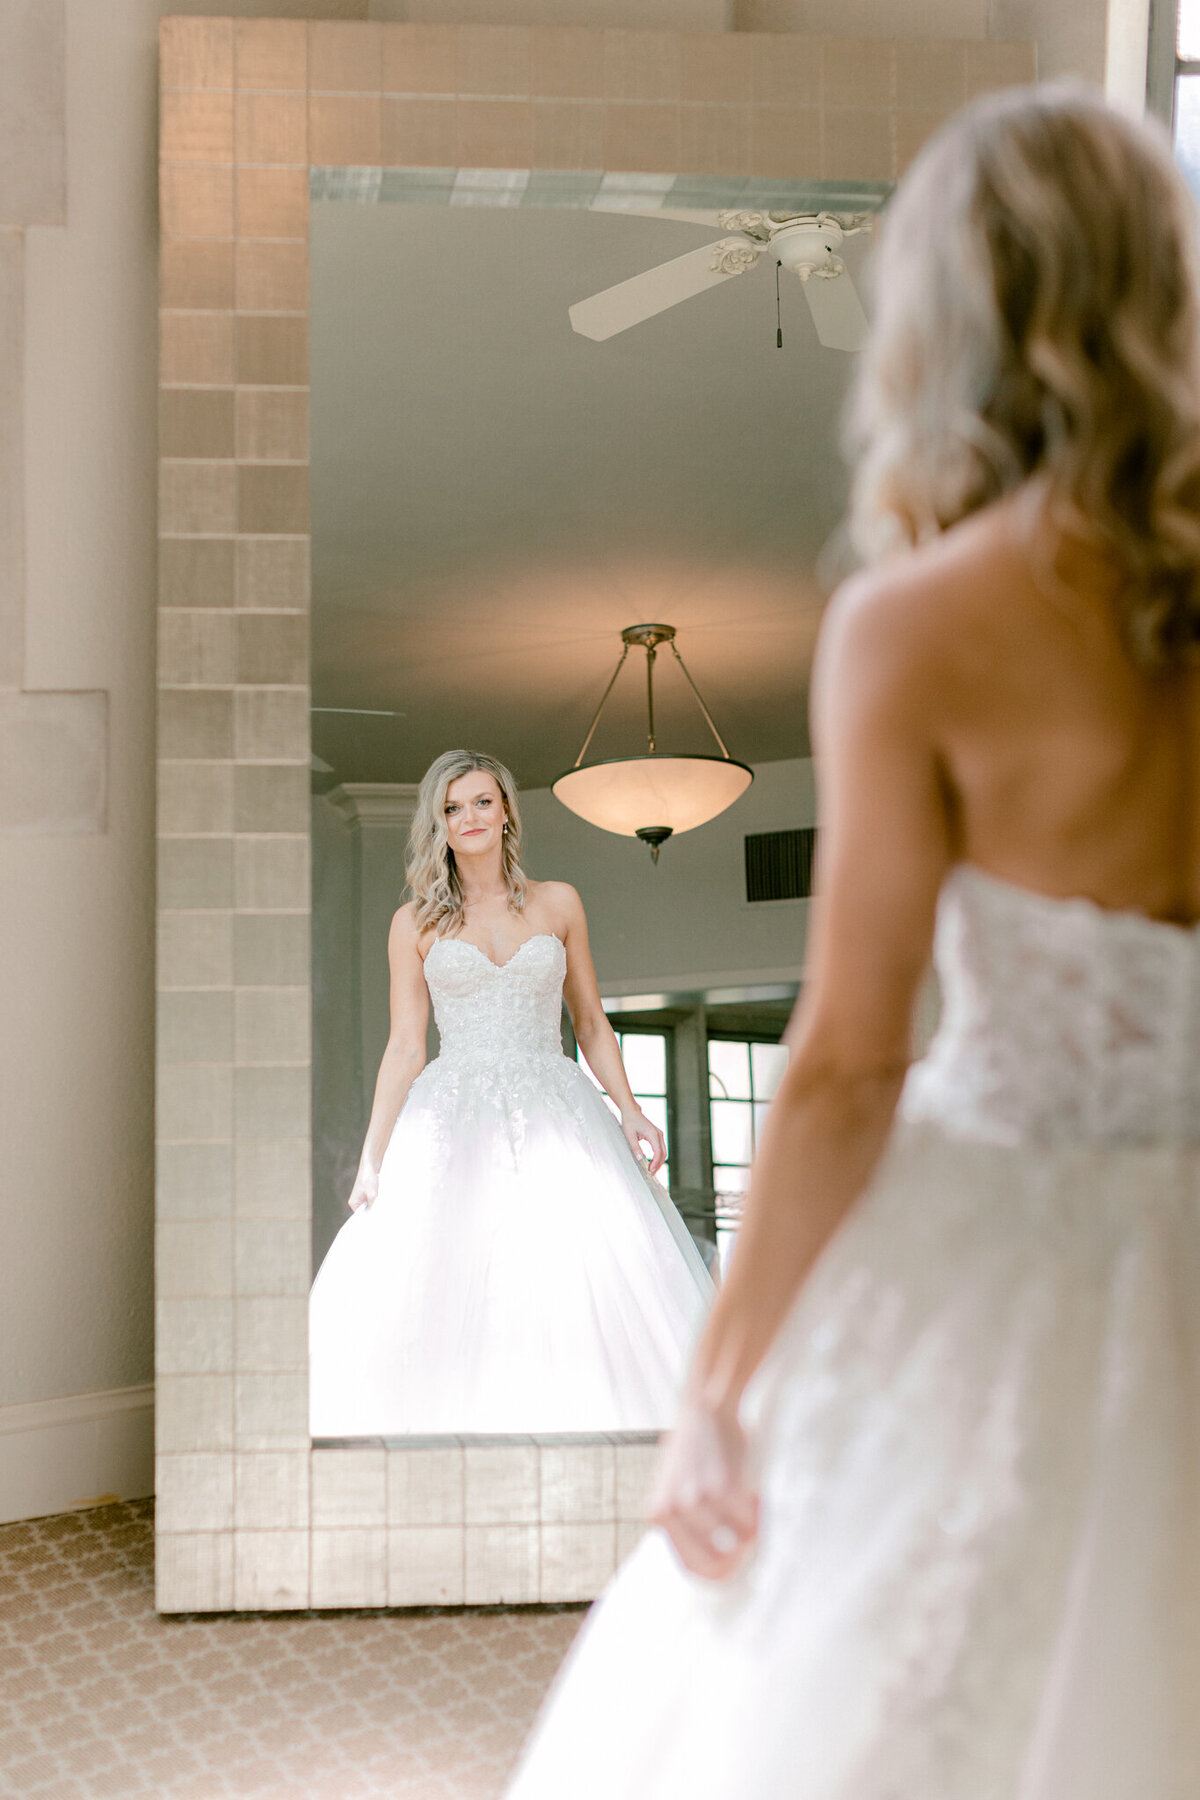 Shelby & Thomas's Wedding at HPUMC The Room on Main | Dallas Wedding Photographer | Sami Kathryn Photography-52